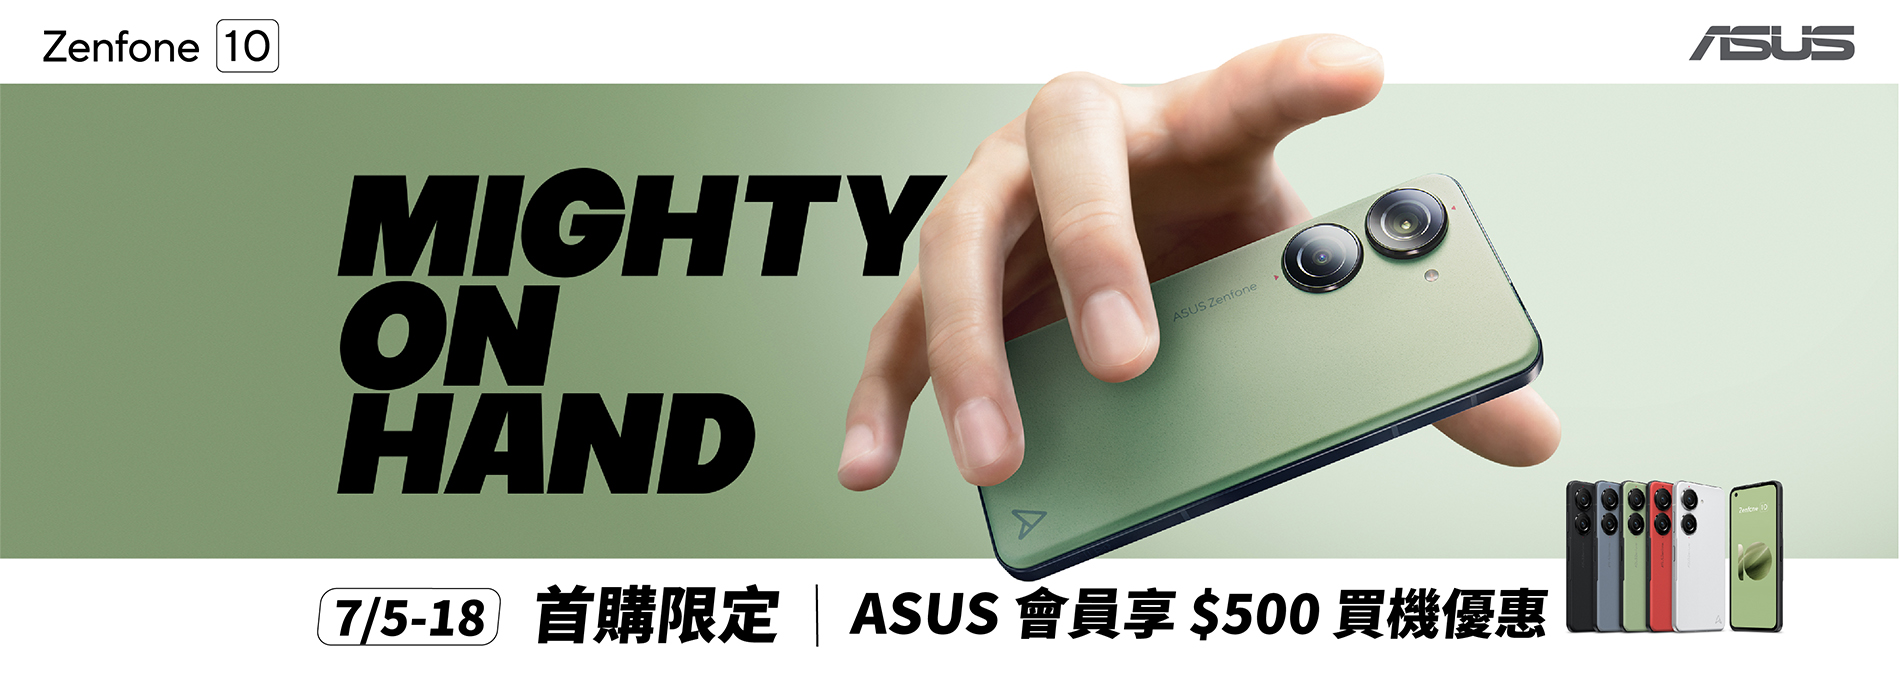 ASUS Event -【Zenfone 10 首購限定】會員登記享$500 買機優惠